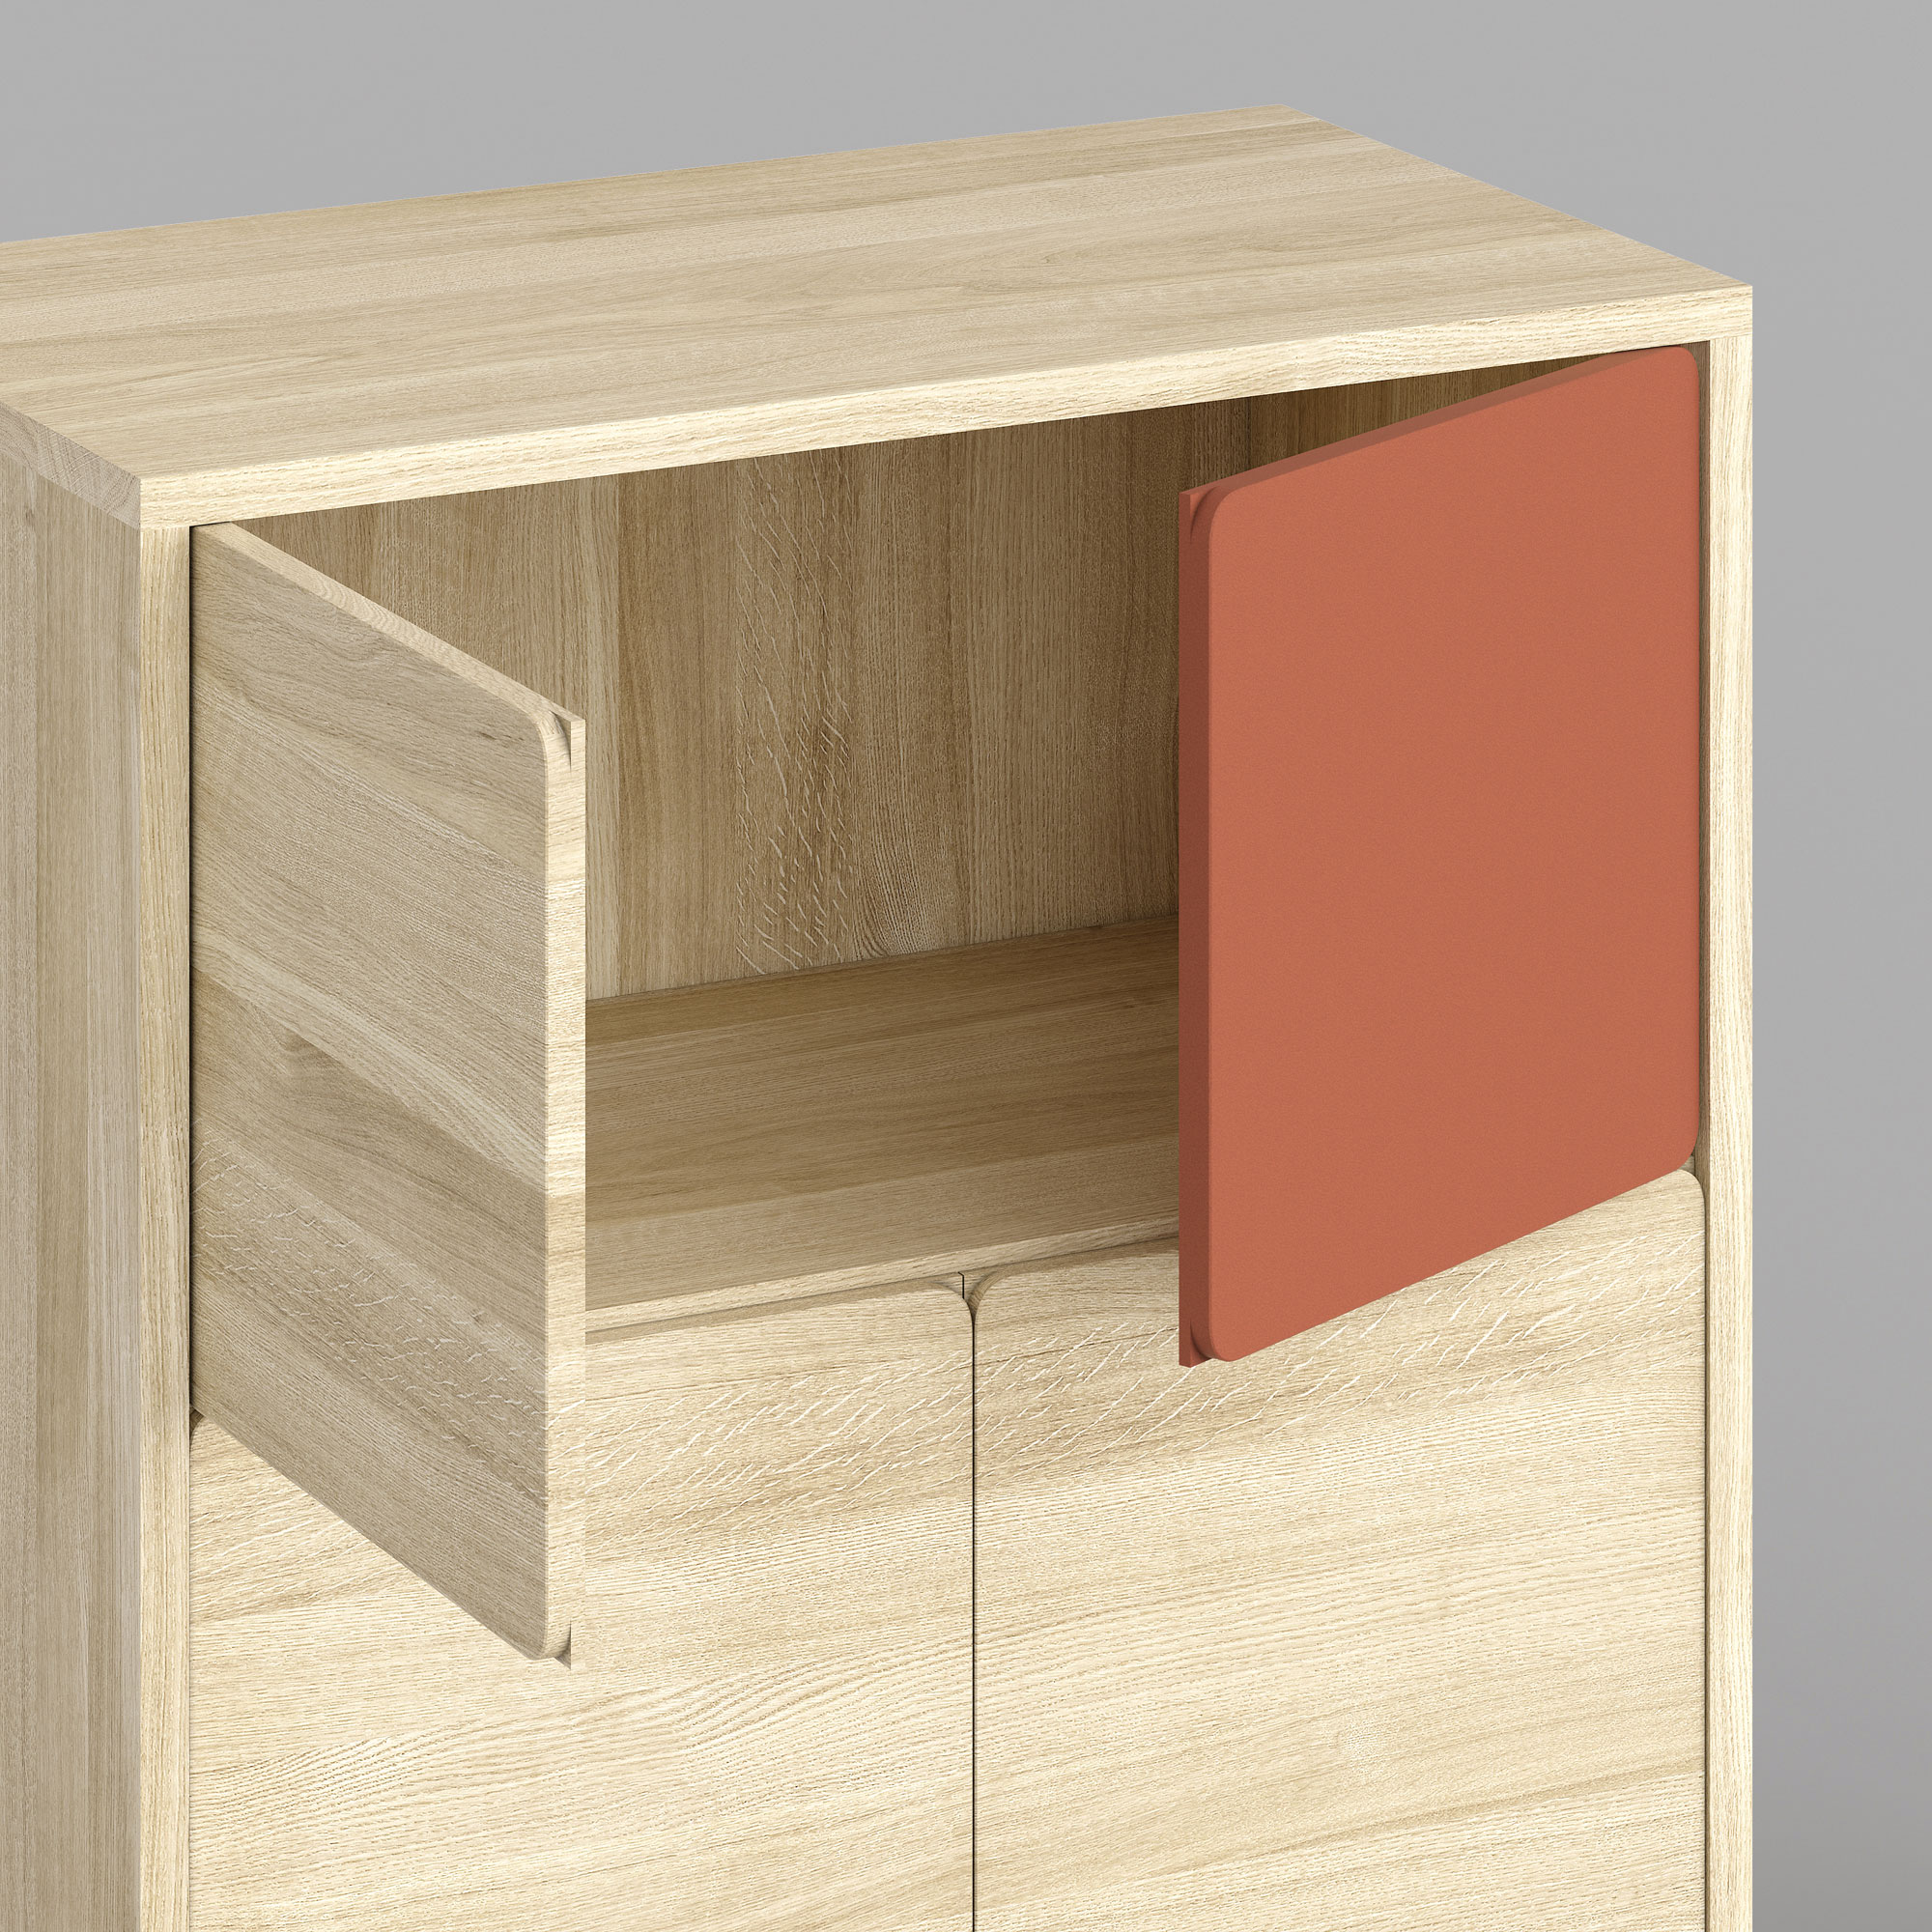 Wooden Sideboard CAVUS cam4 custom made in solid wood by vitamin design